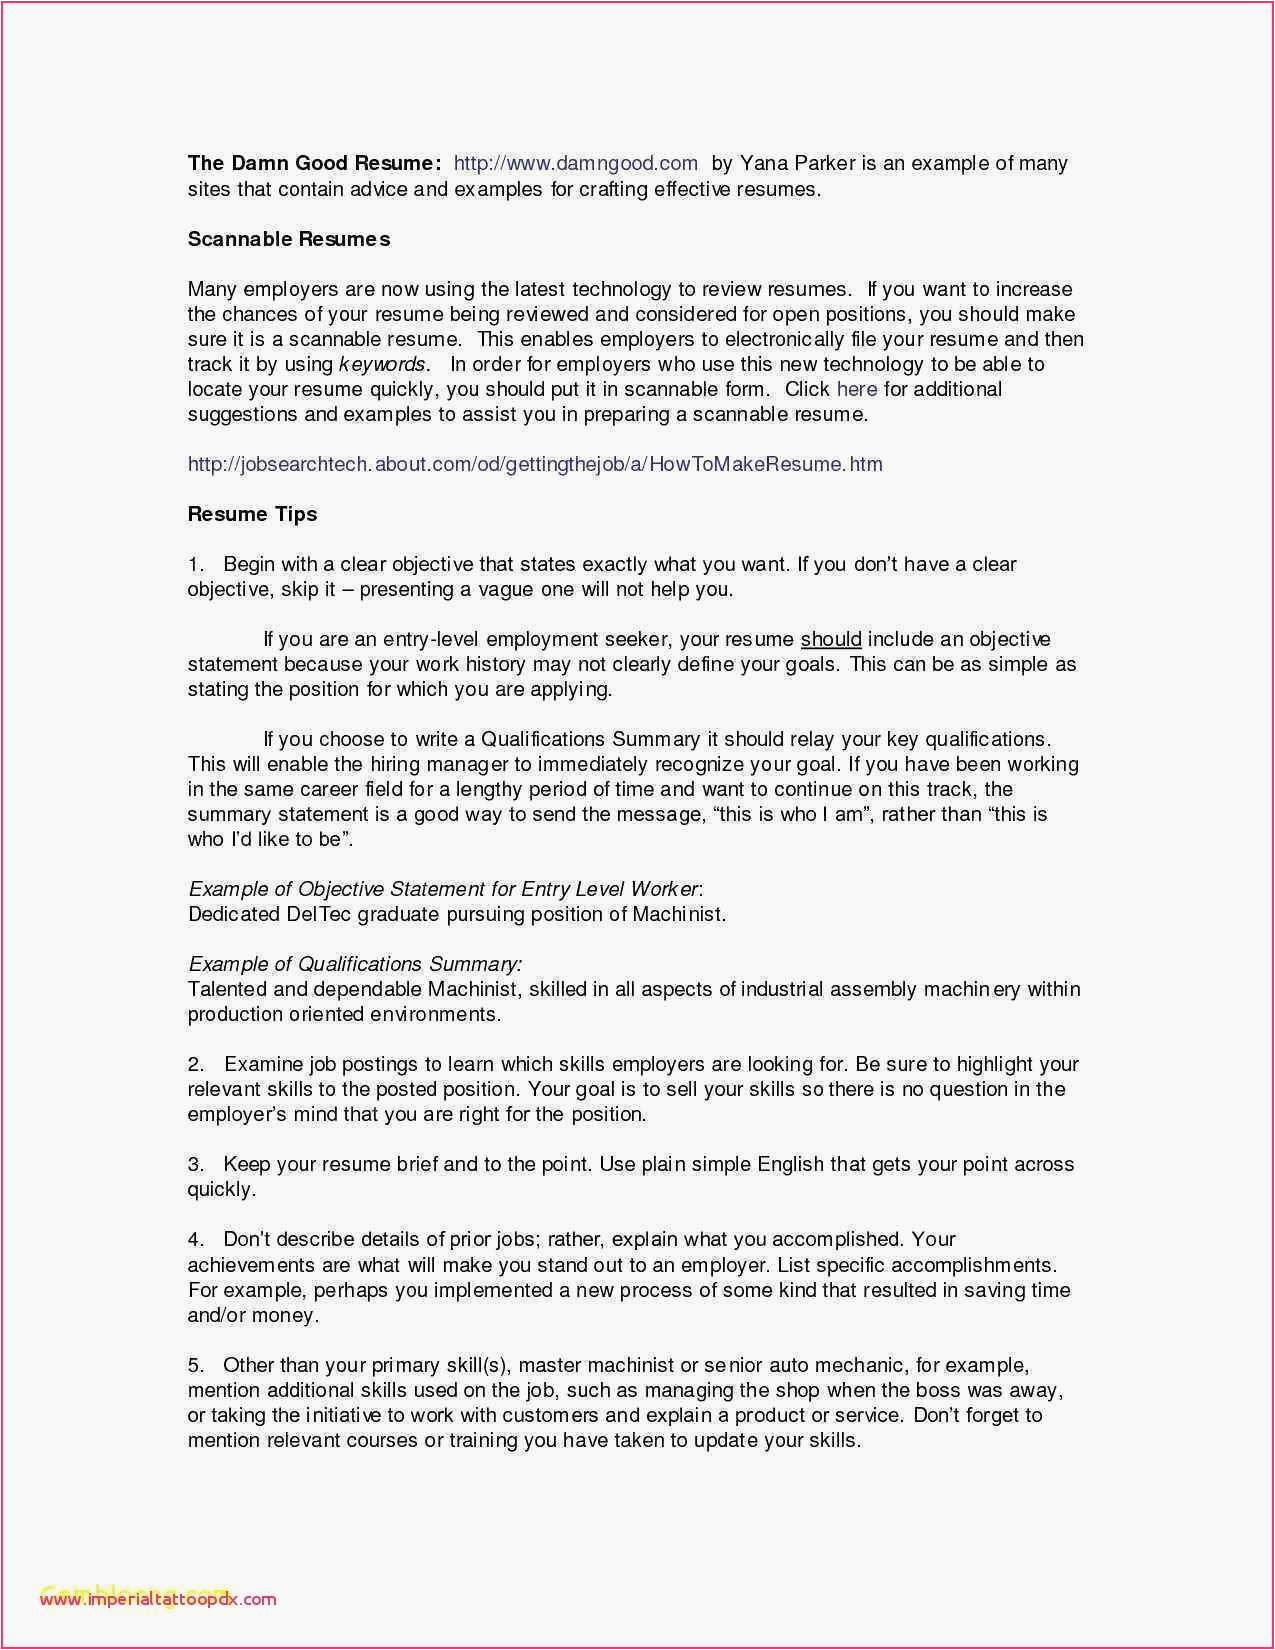 Sample Resume Fashion Design Personal Statement Personal Statement Examples for Scholarship